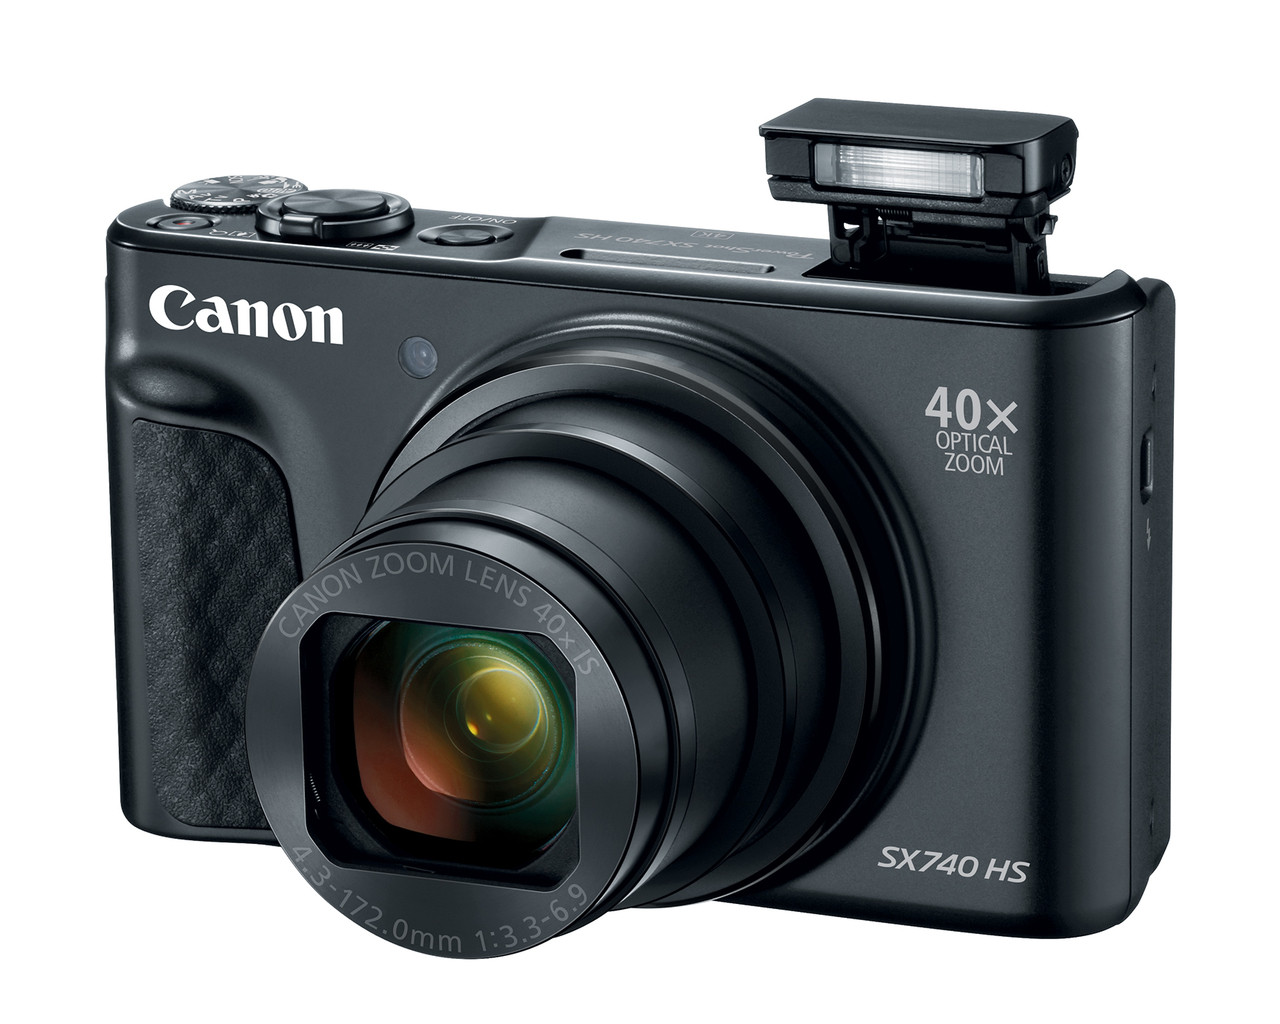 Canon PowerShot SX740 HS Digital Camera (Black) | Bedfords.com